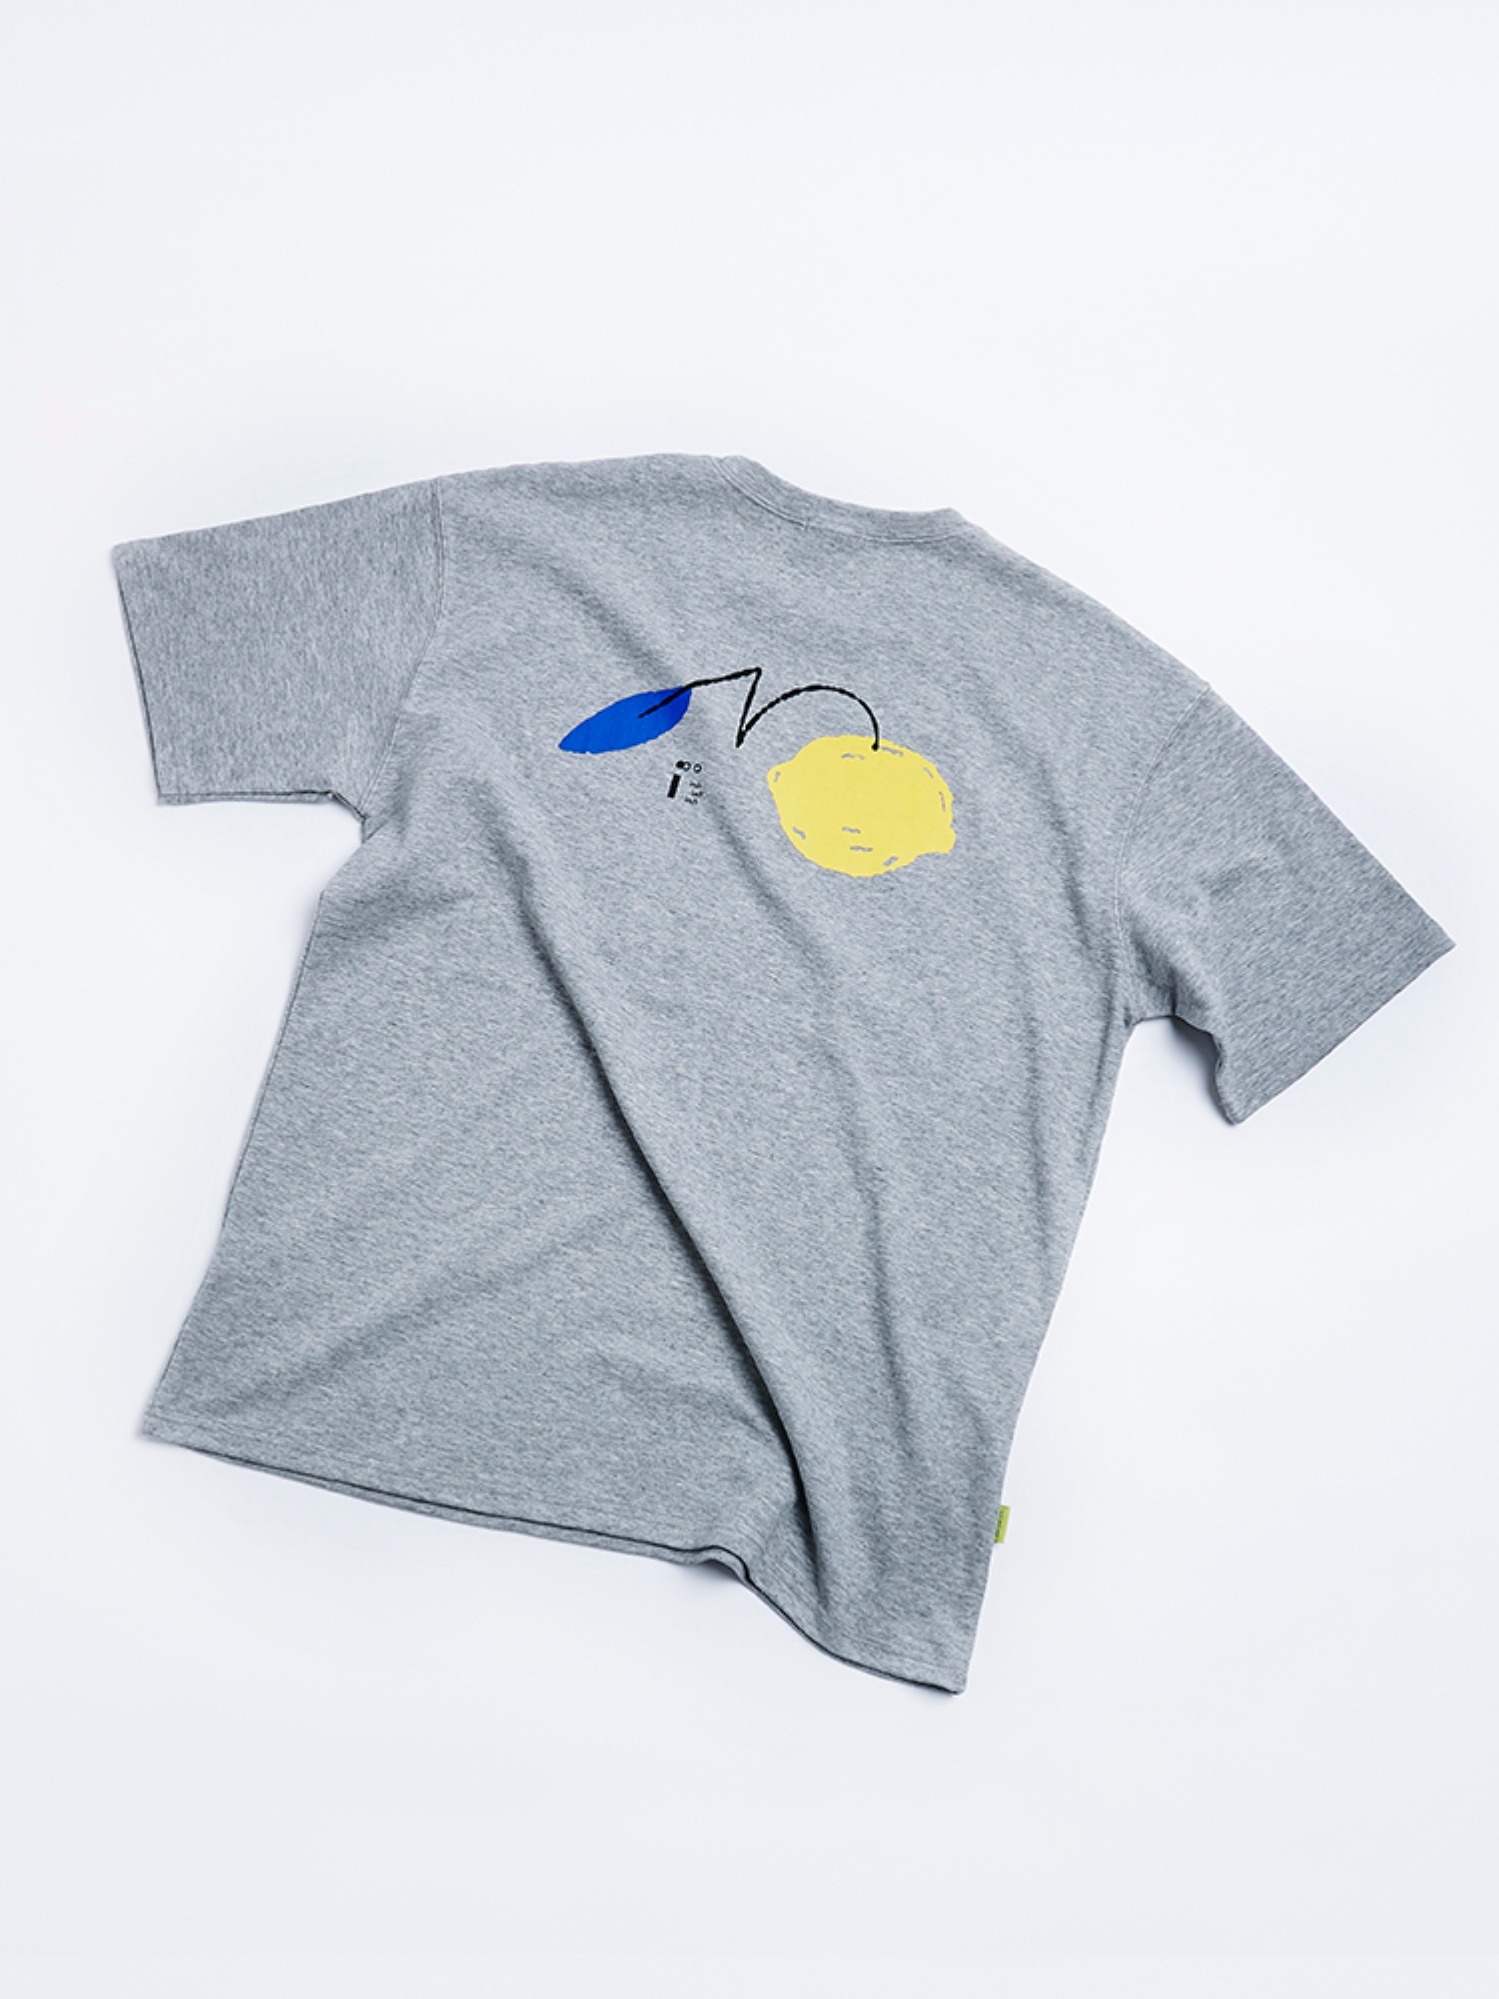 Lemon Solo T shirt (Heather Gray)